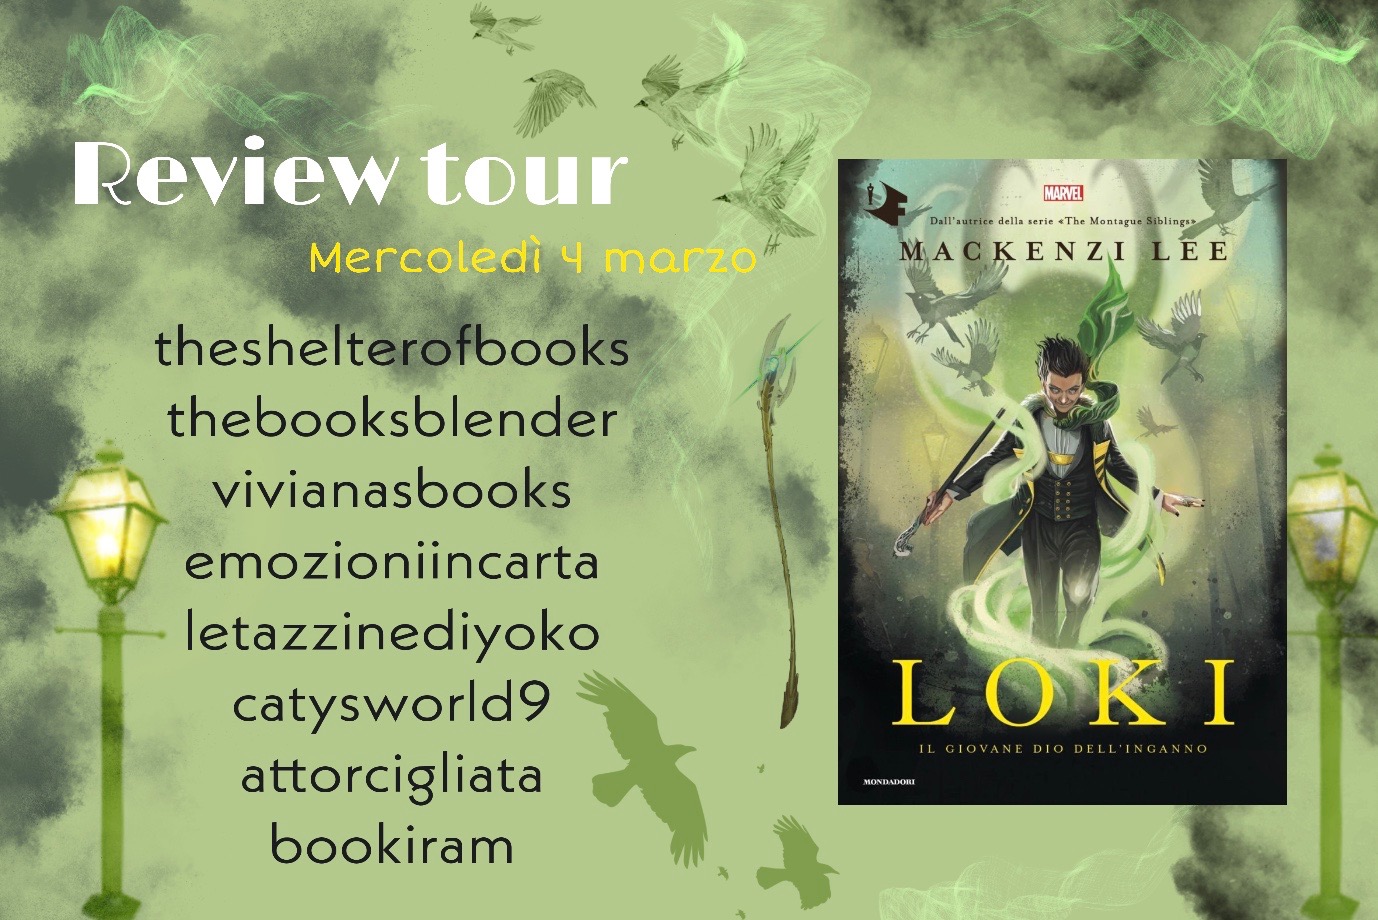 Review Tour: Loki. Il giovane dio dell’inganno